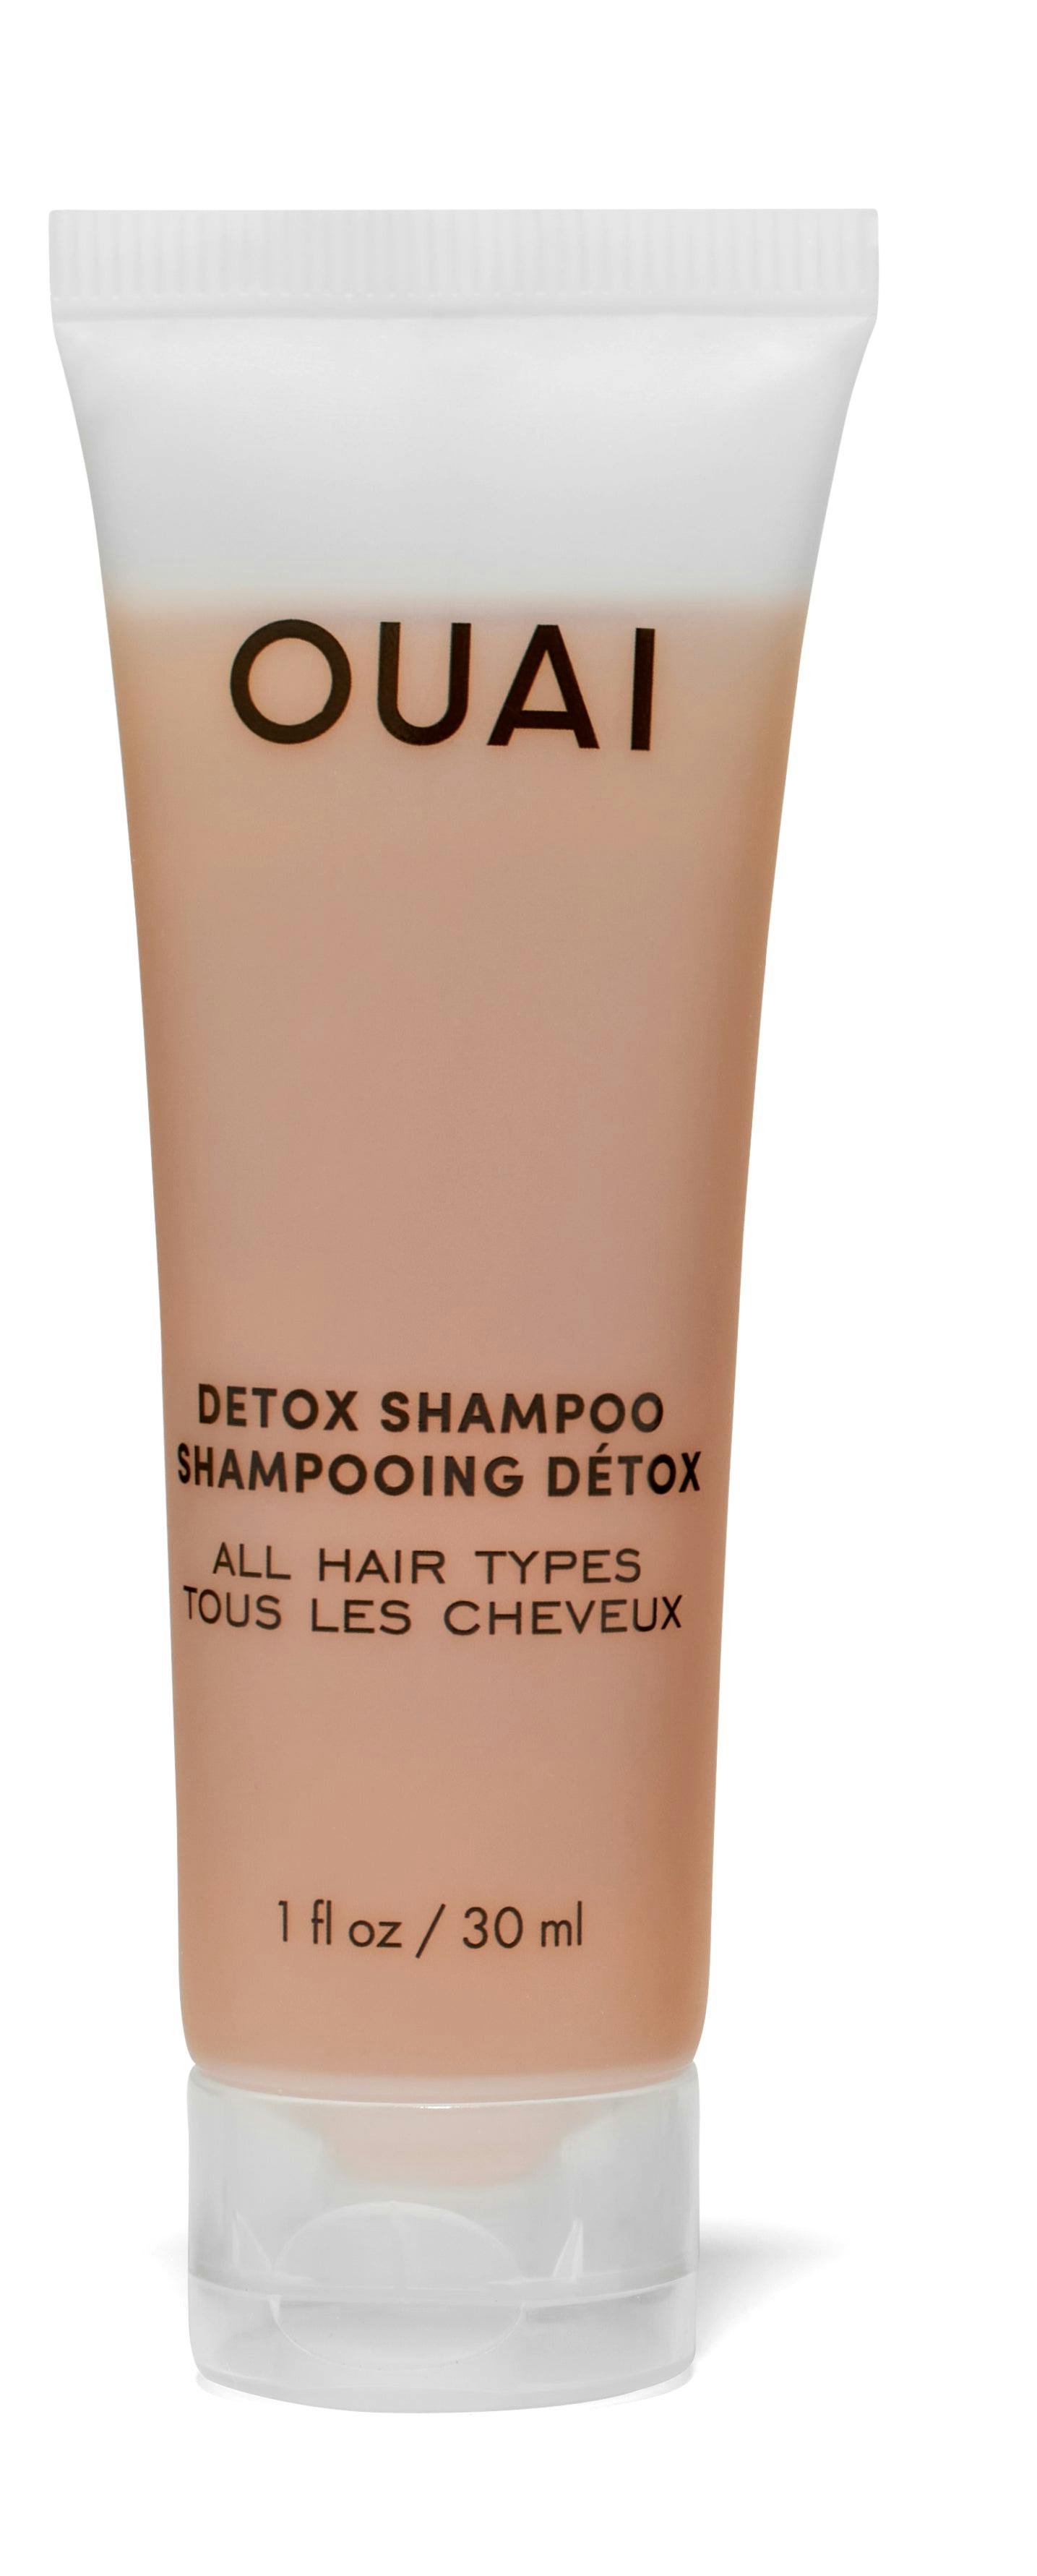 Detox Shampoo Detox Shampoo - Deluxe Sample 1